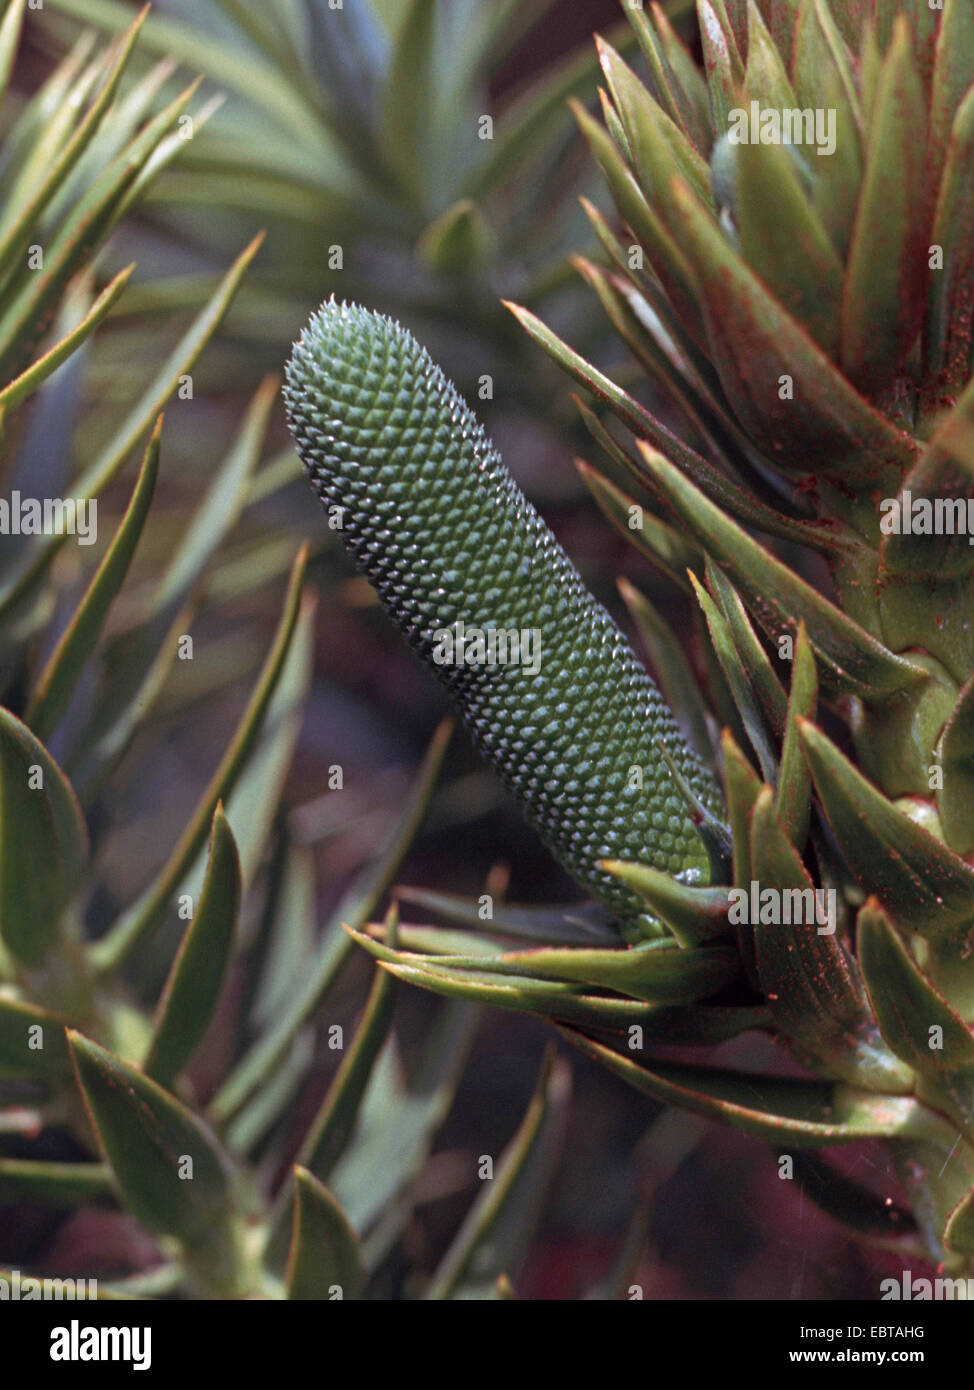 Brasilian pine (Araucaria angustifolia), male inflorescence in bud Stock Photo